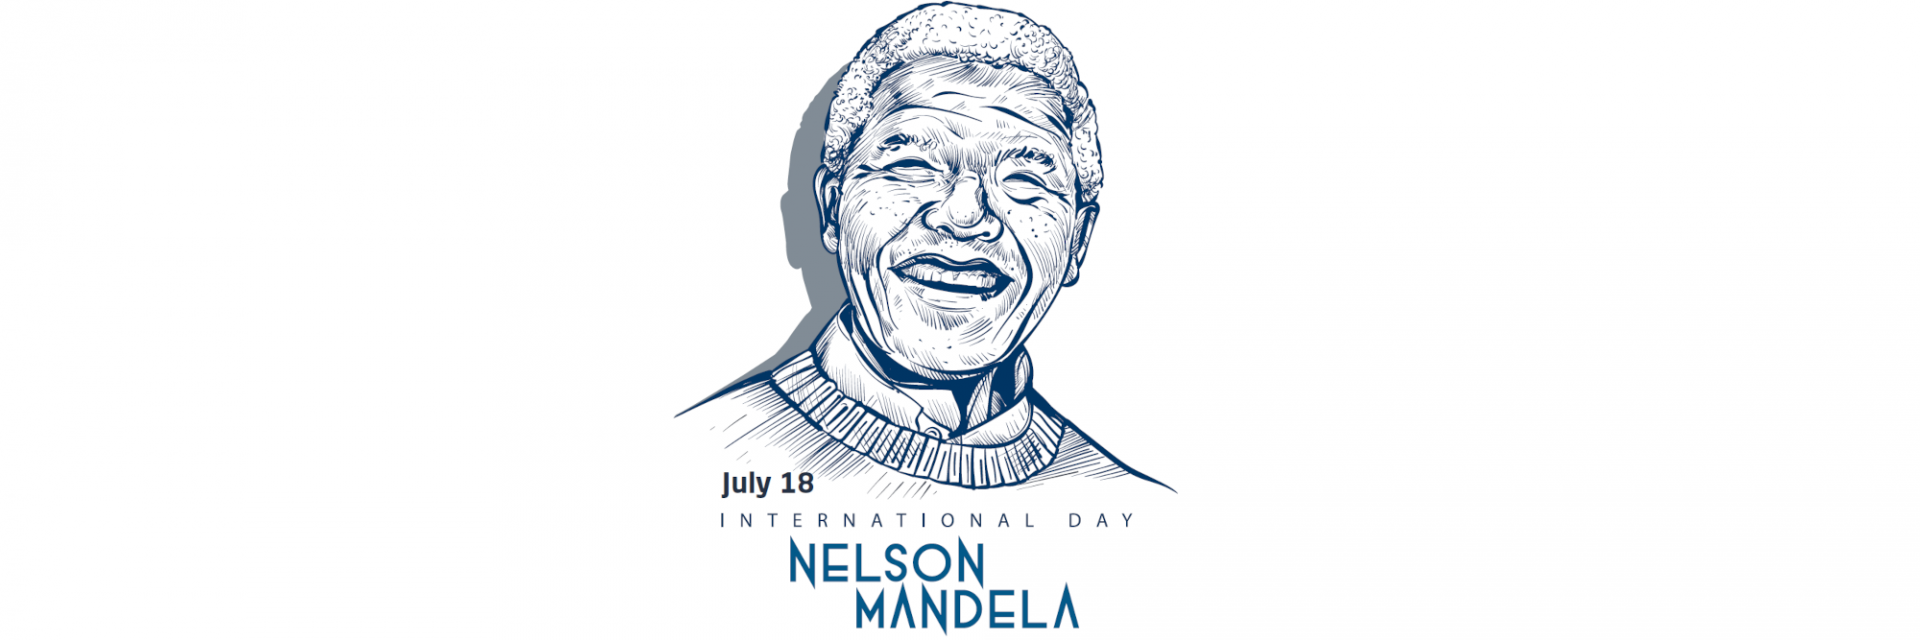 The Secretary-General - Message on Nelson Mandela International Day